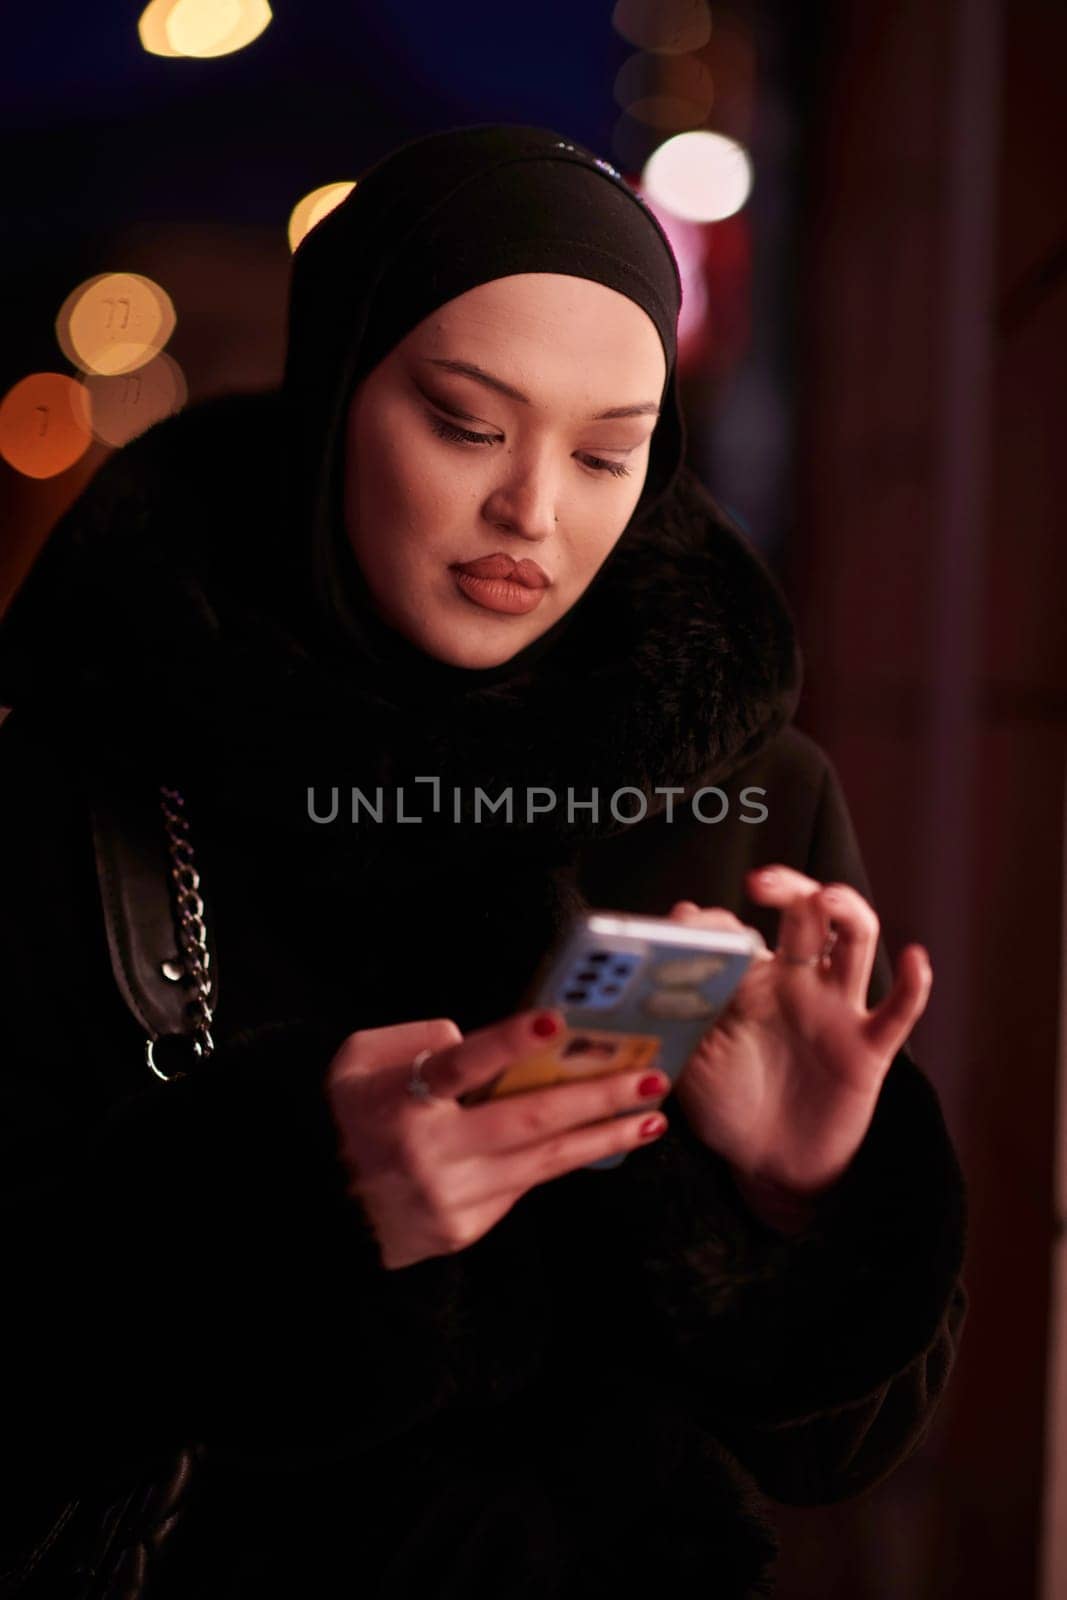 uropean Muslim Hijabi Business Lady checking her phone on urban city street at night by dotshock